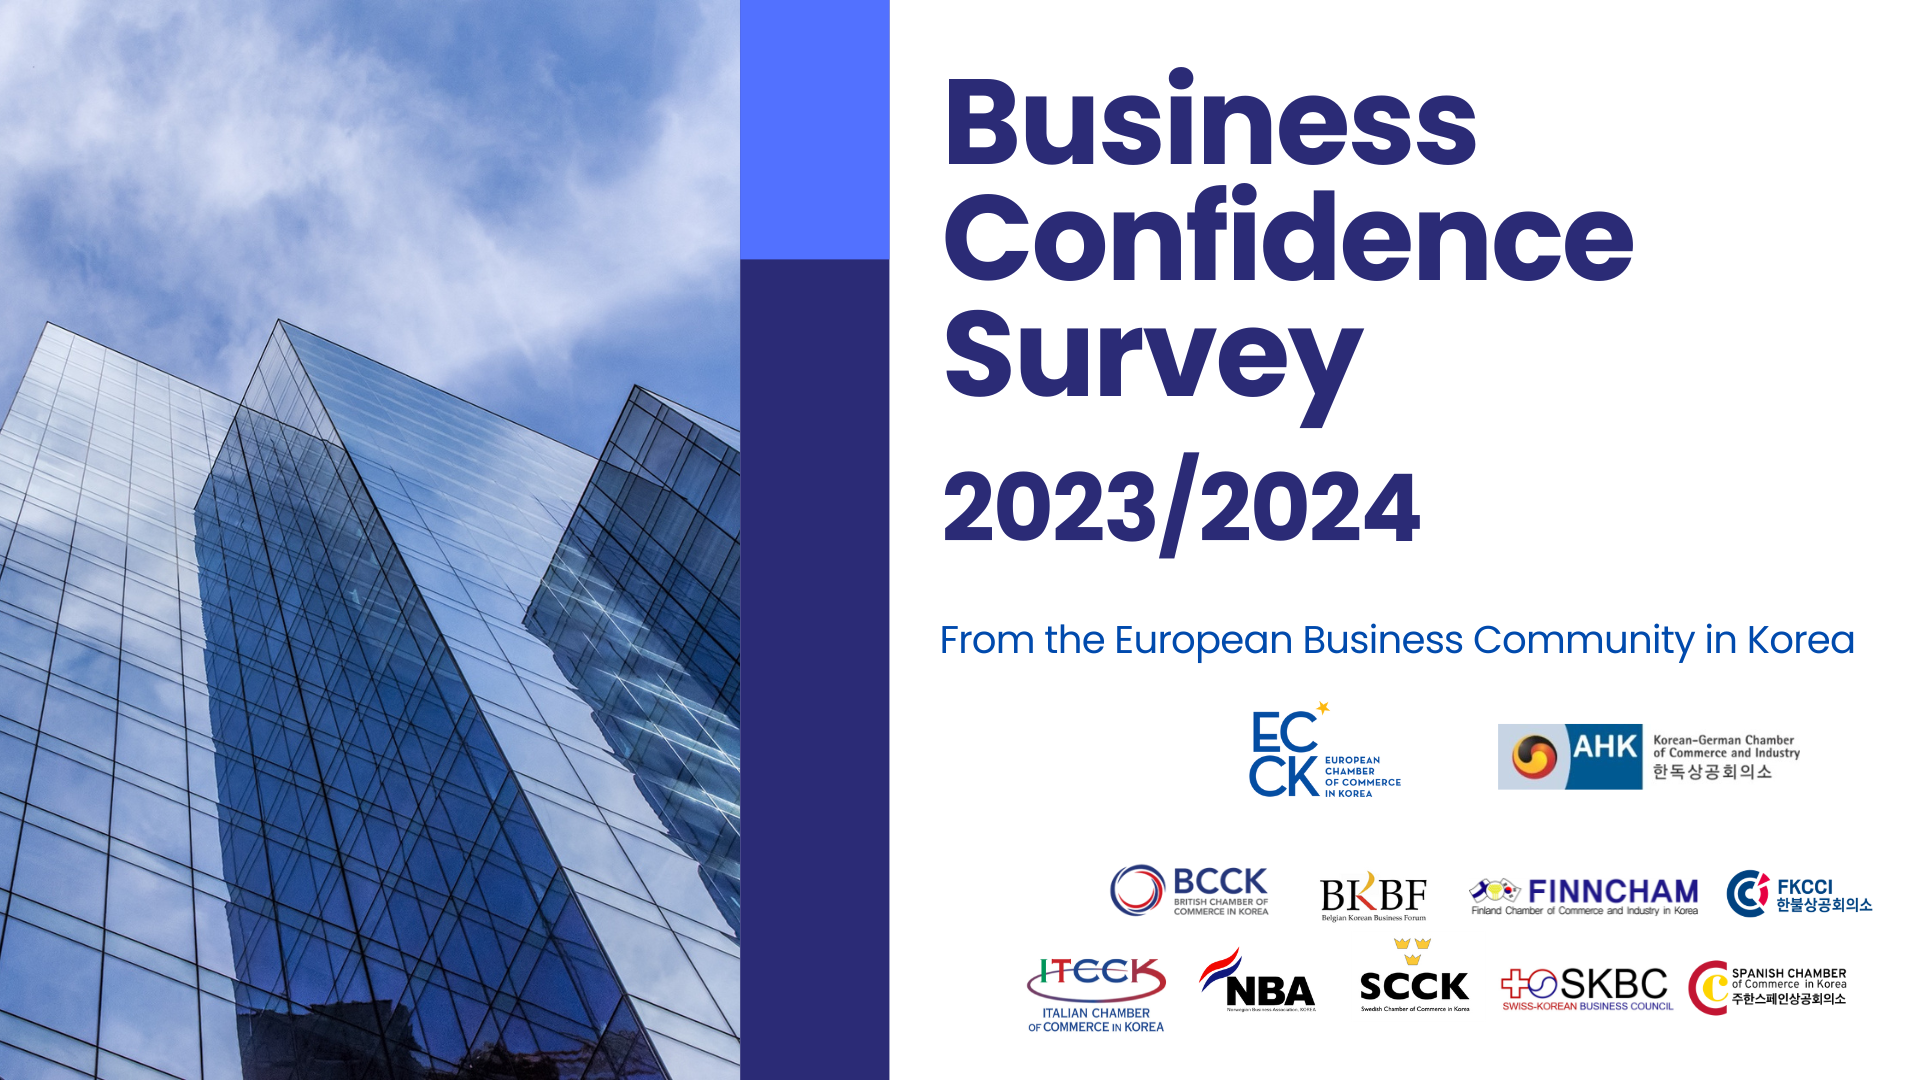 Business Confidence Survey 2023/24 Opens